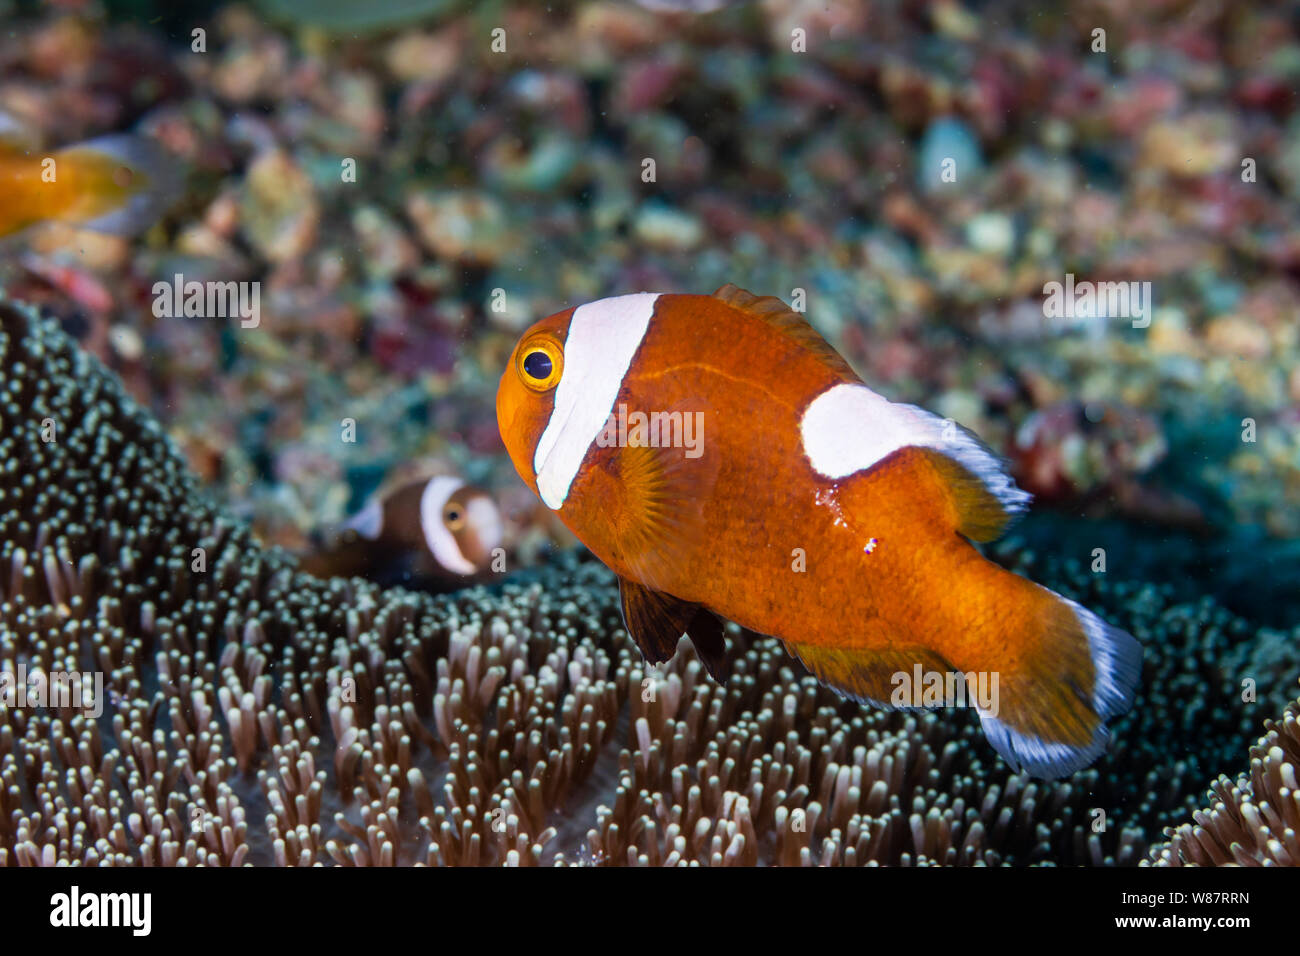 Cute Saddleback Clownfish on a Coral Reef Stock Photo